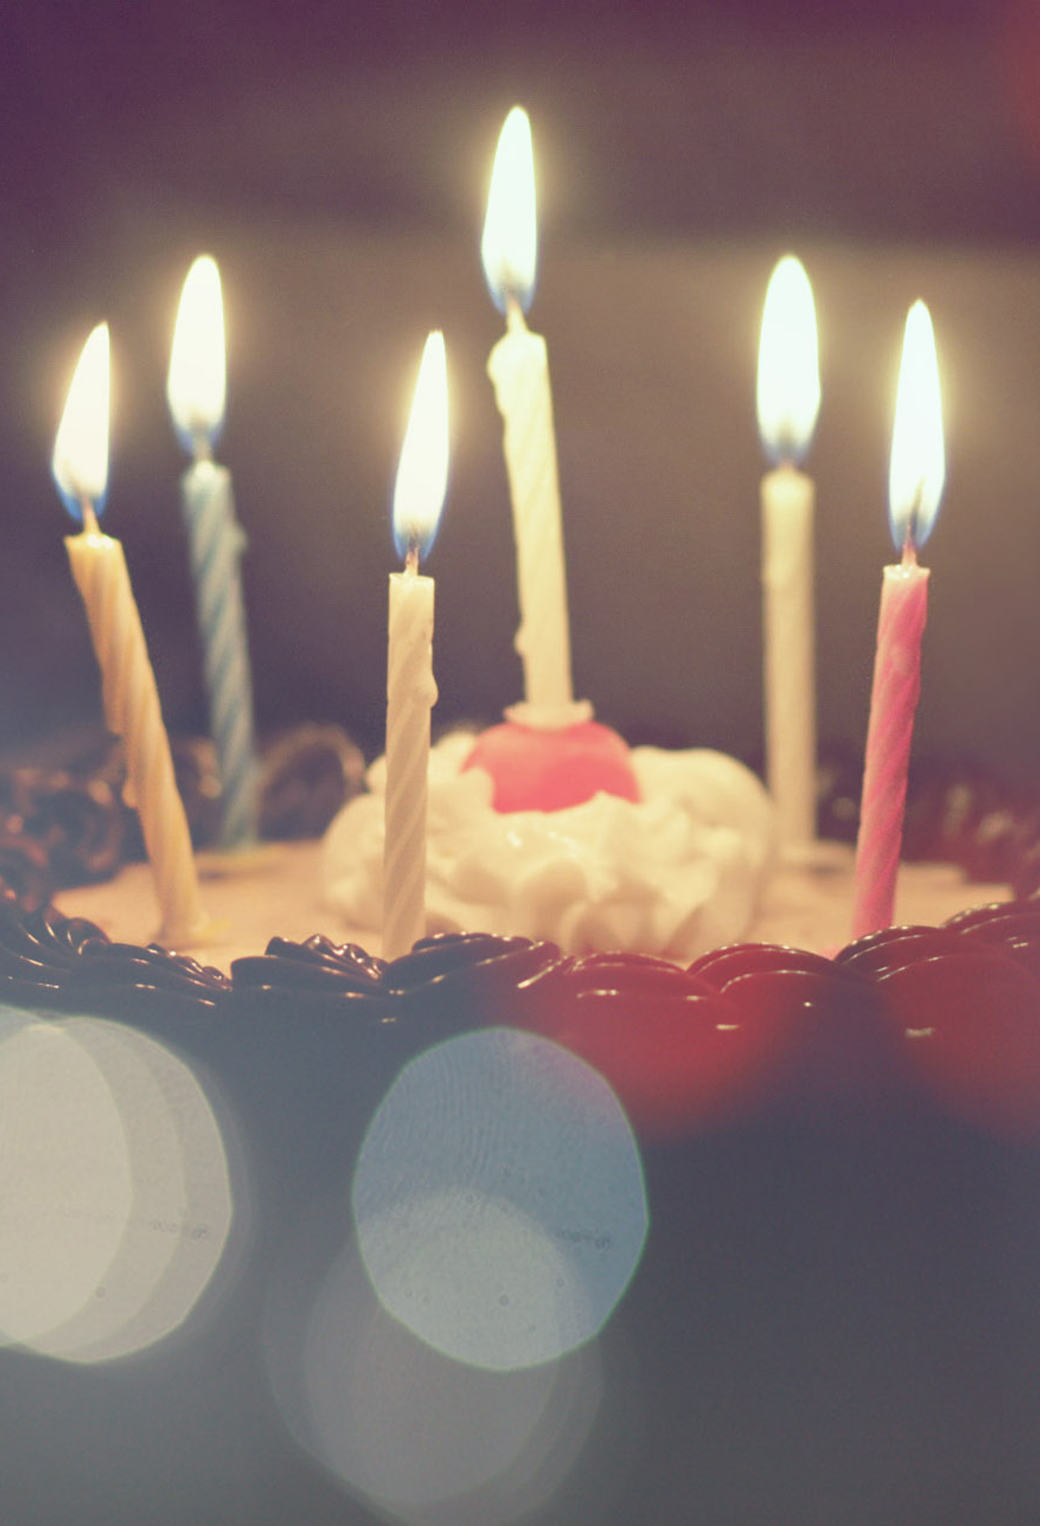 cake wallpaper,candle,lighting,birthday,birthday cake,cake